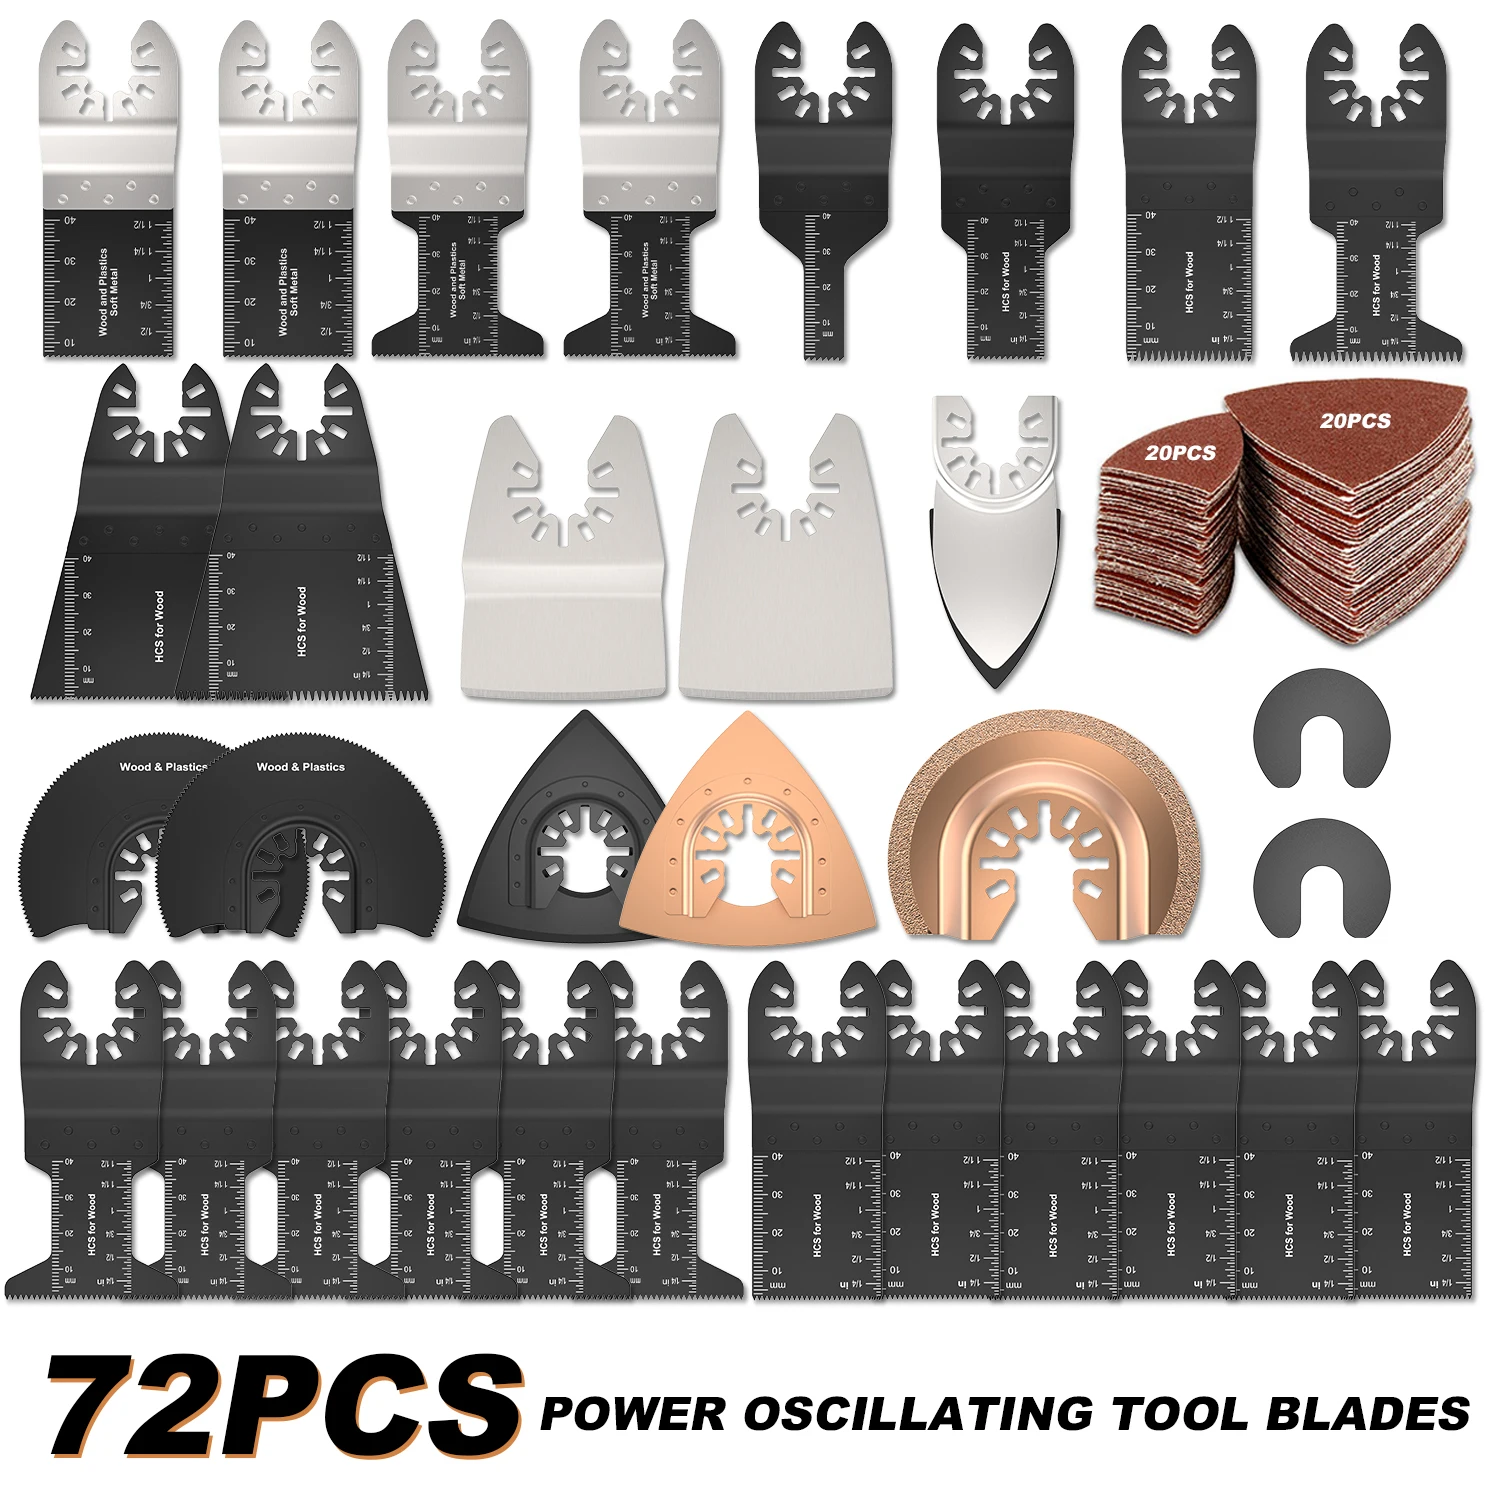 

72 Pcs Oscillating Multi Tool Saw Blades Kit For Renovator Power Tools As Fein Multimaster,Dewalt,Ryobi Wood Metal Cutting Tools